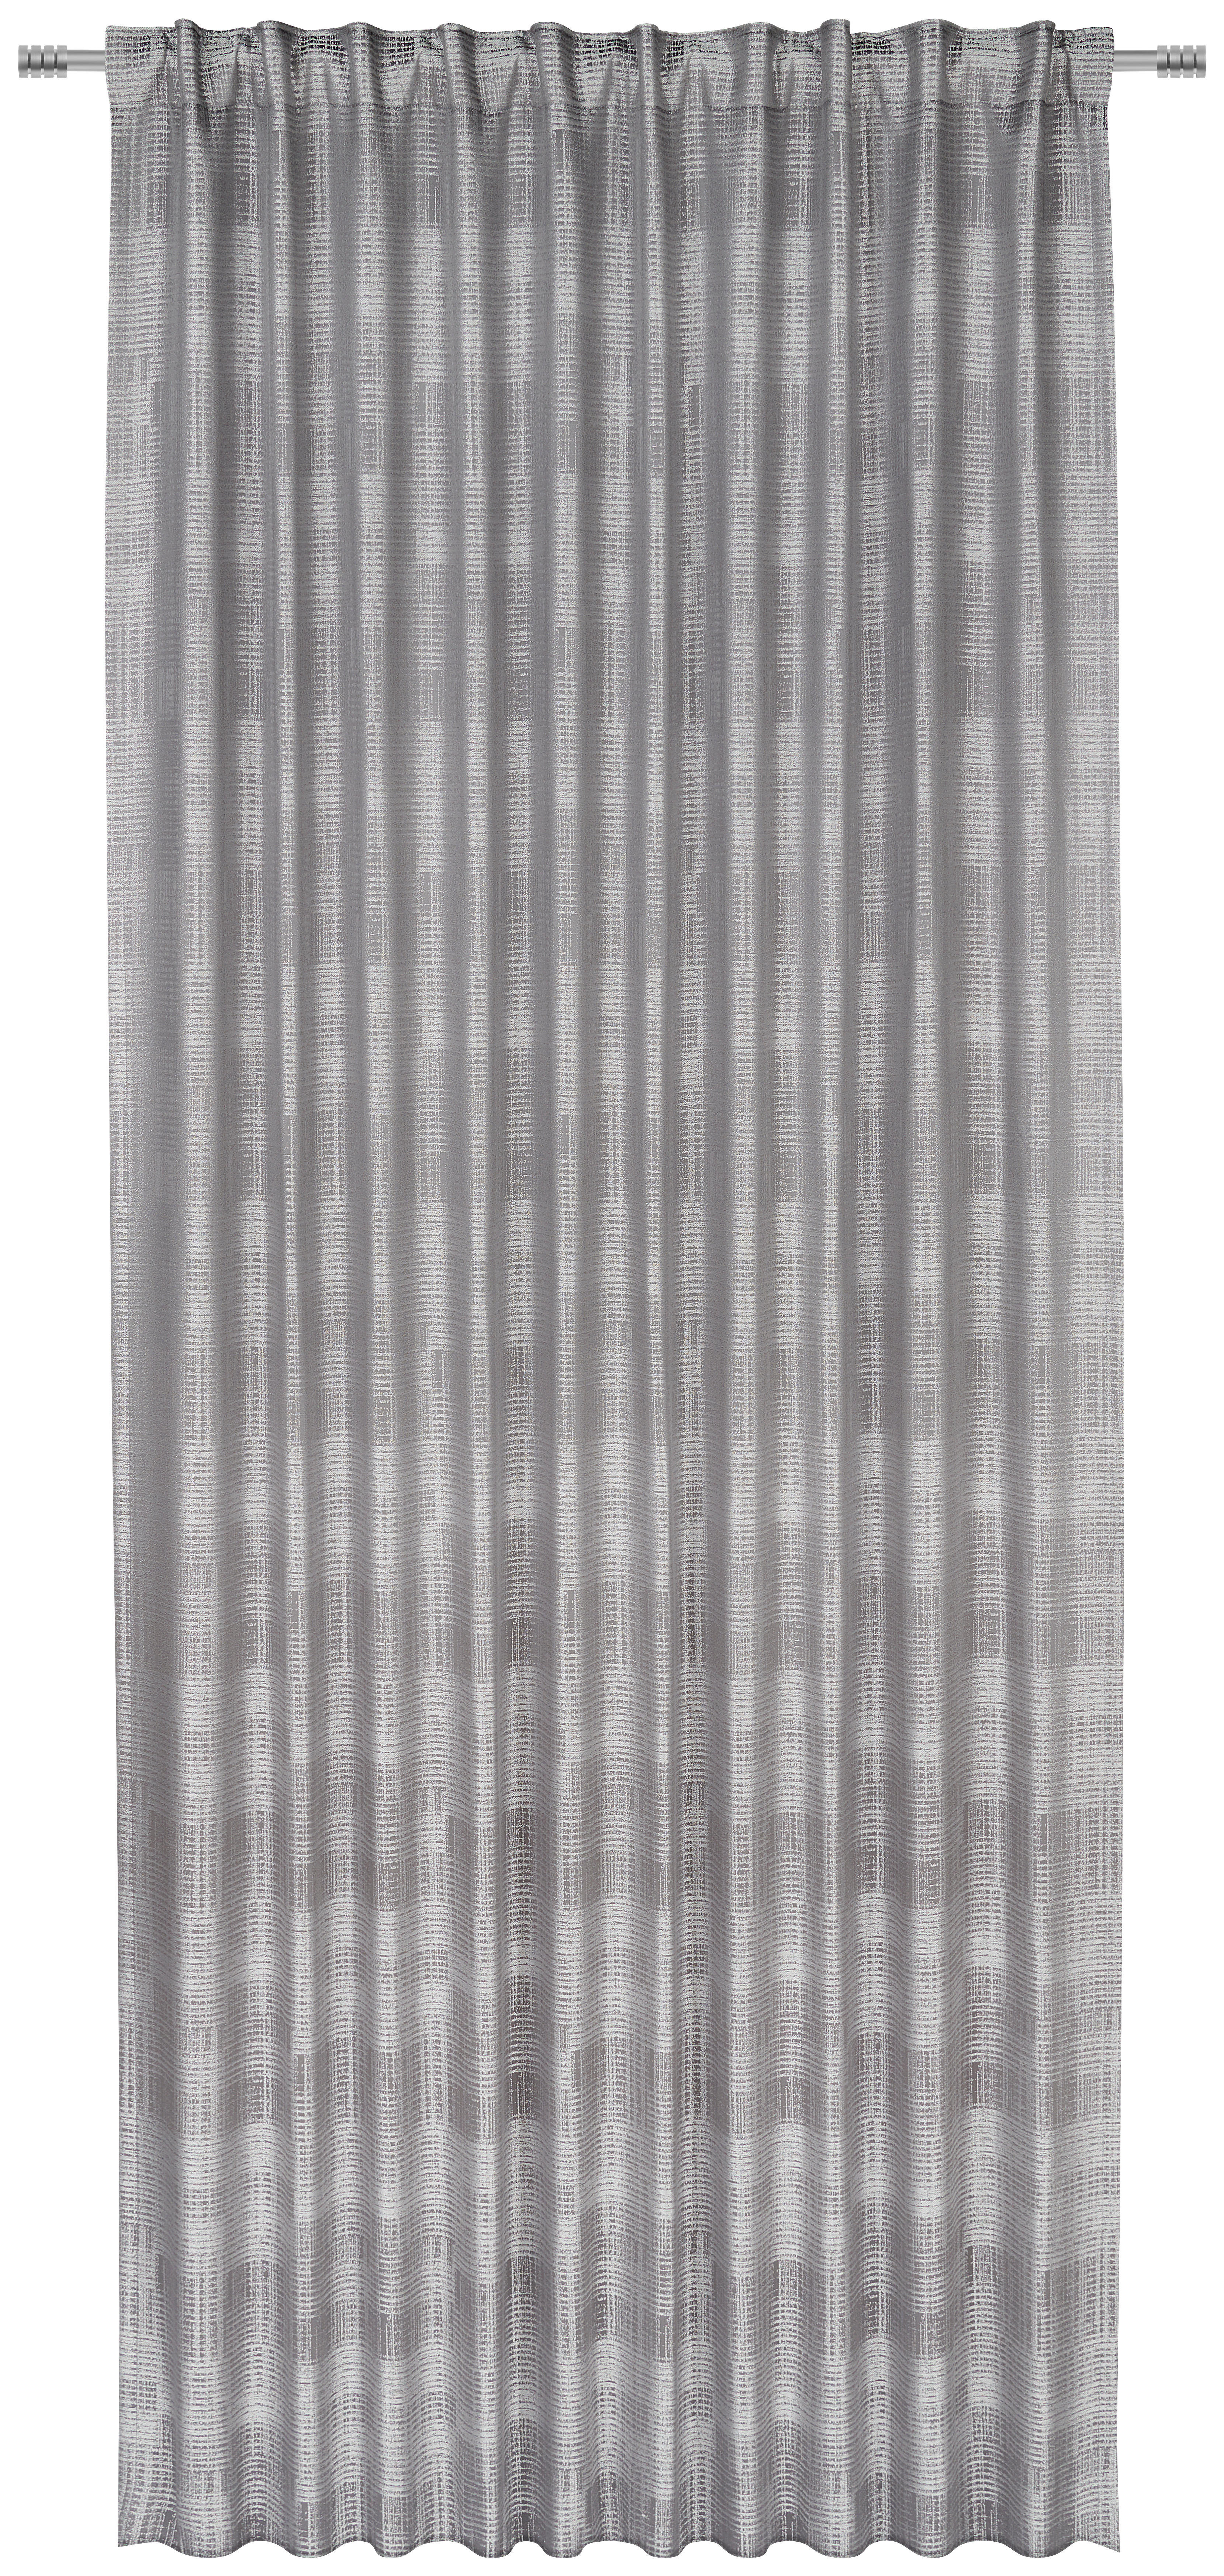 GARDINLÄNGD ej transparent  - grå, Klassisk, textil (140/245cm) - Esposa